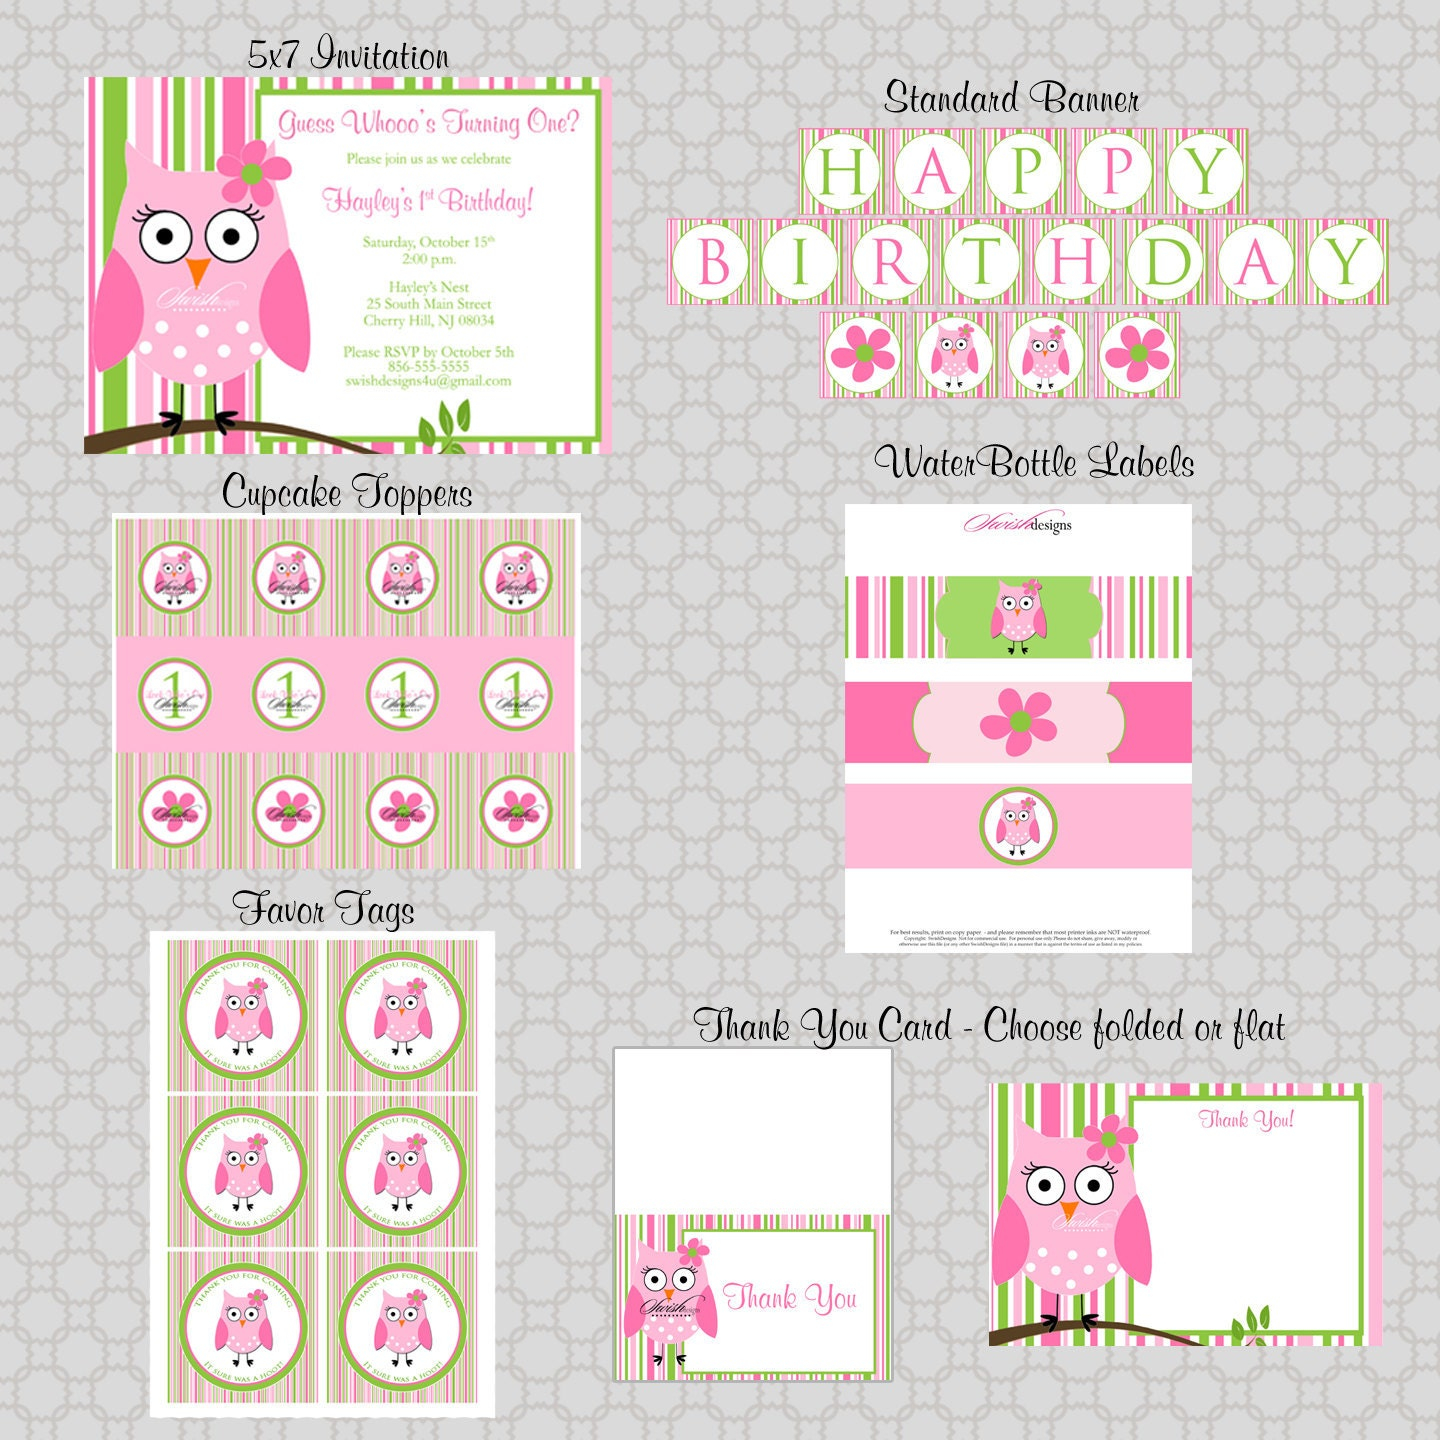 Owl Birthday Party Printables